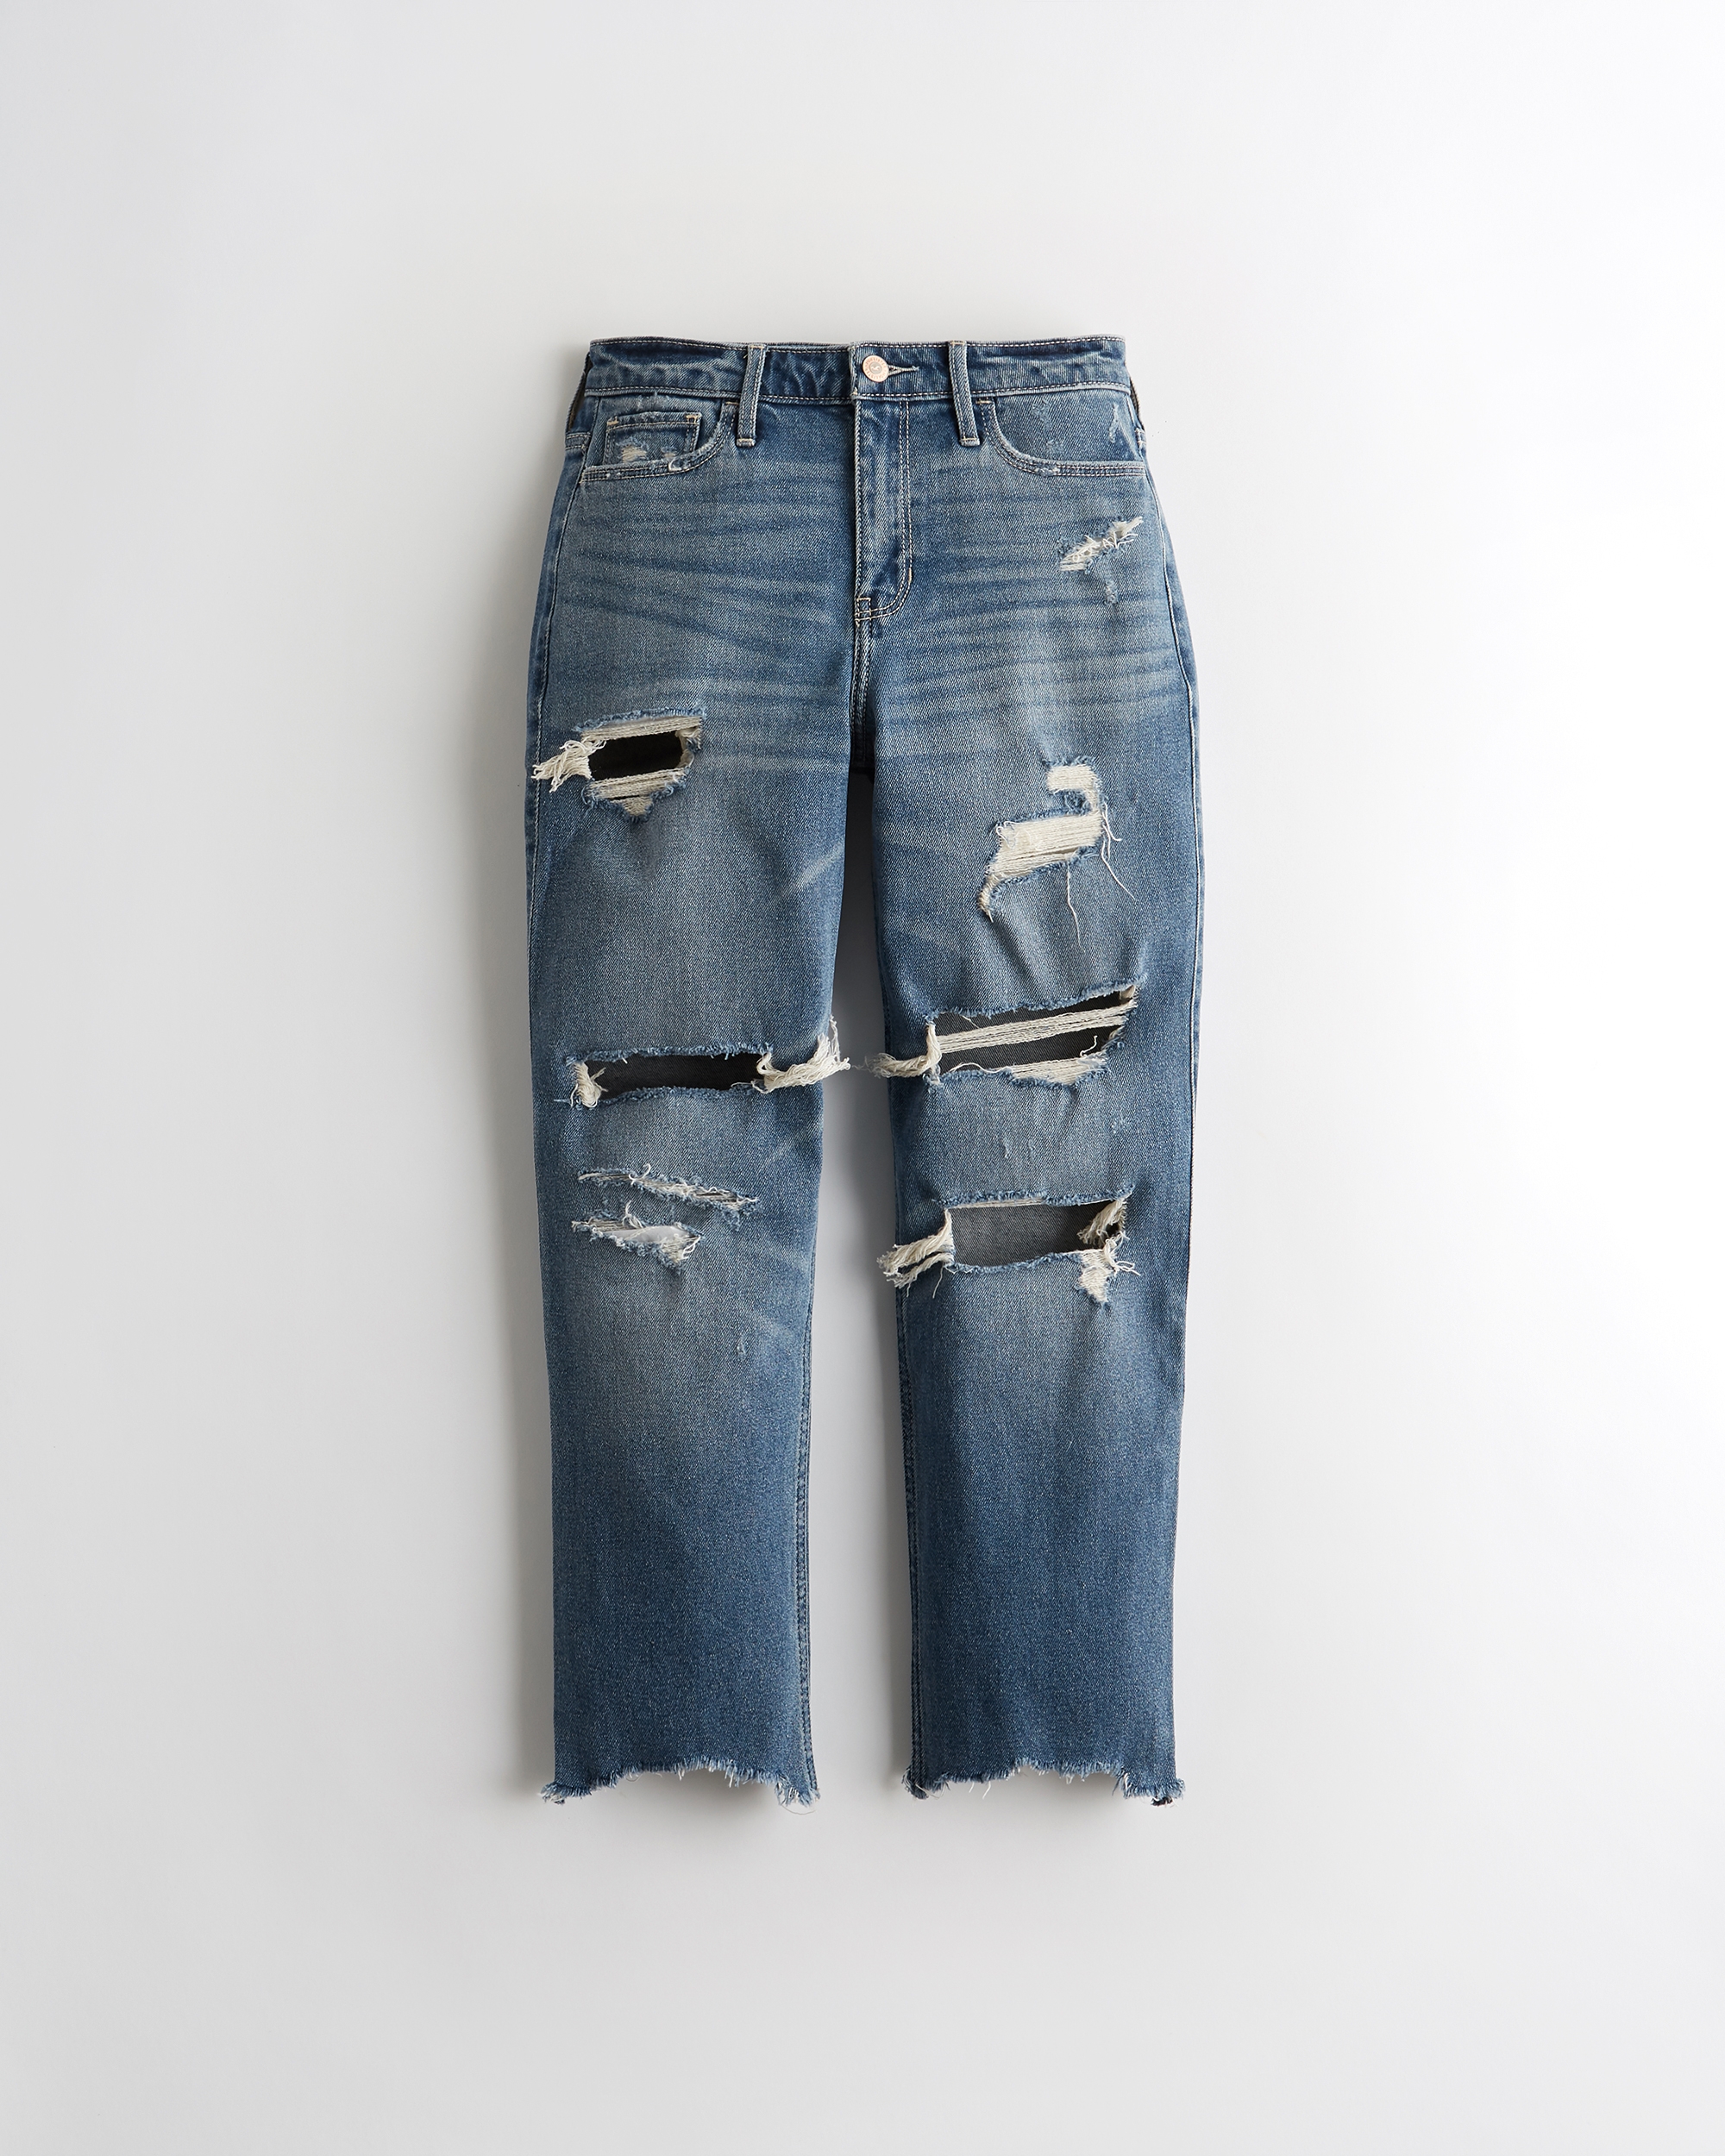 hollister crop jeans